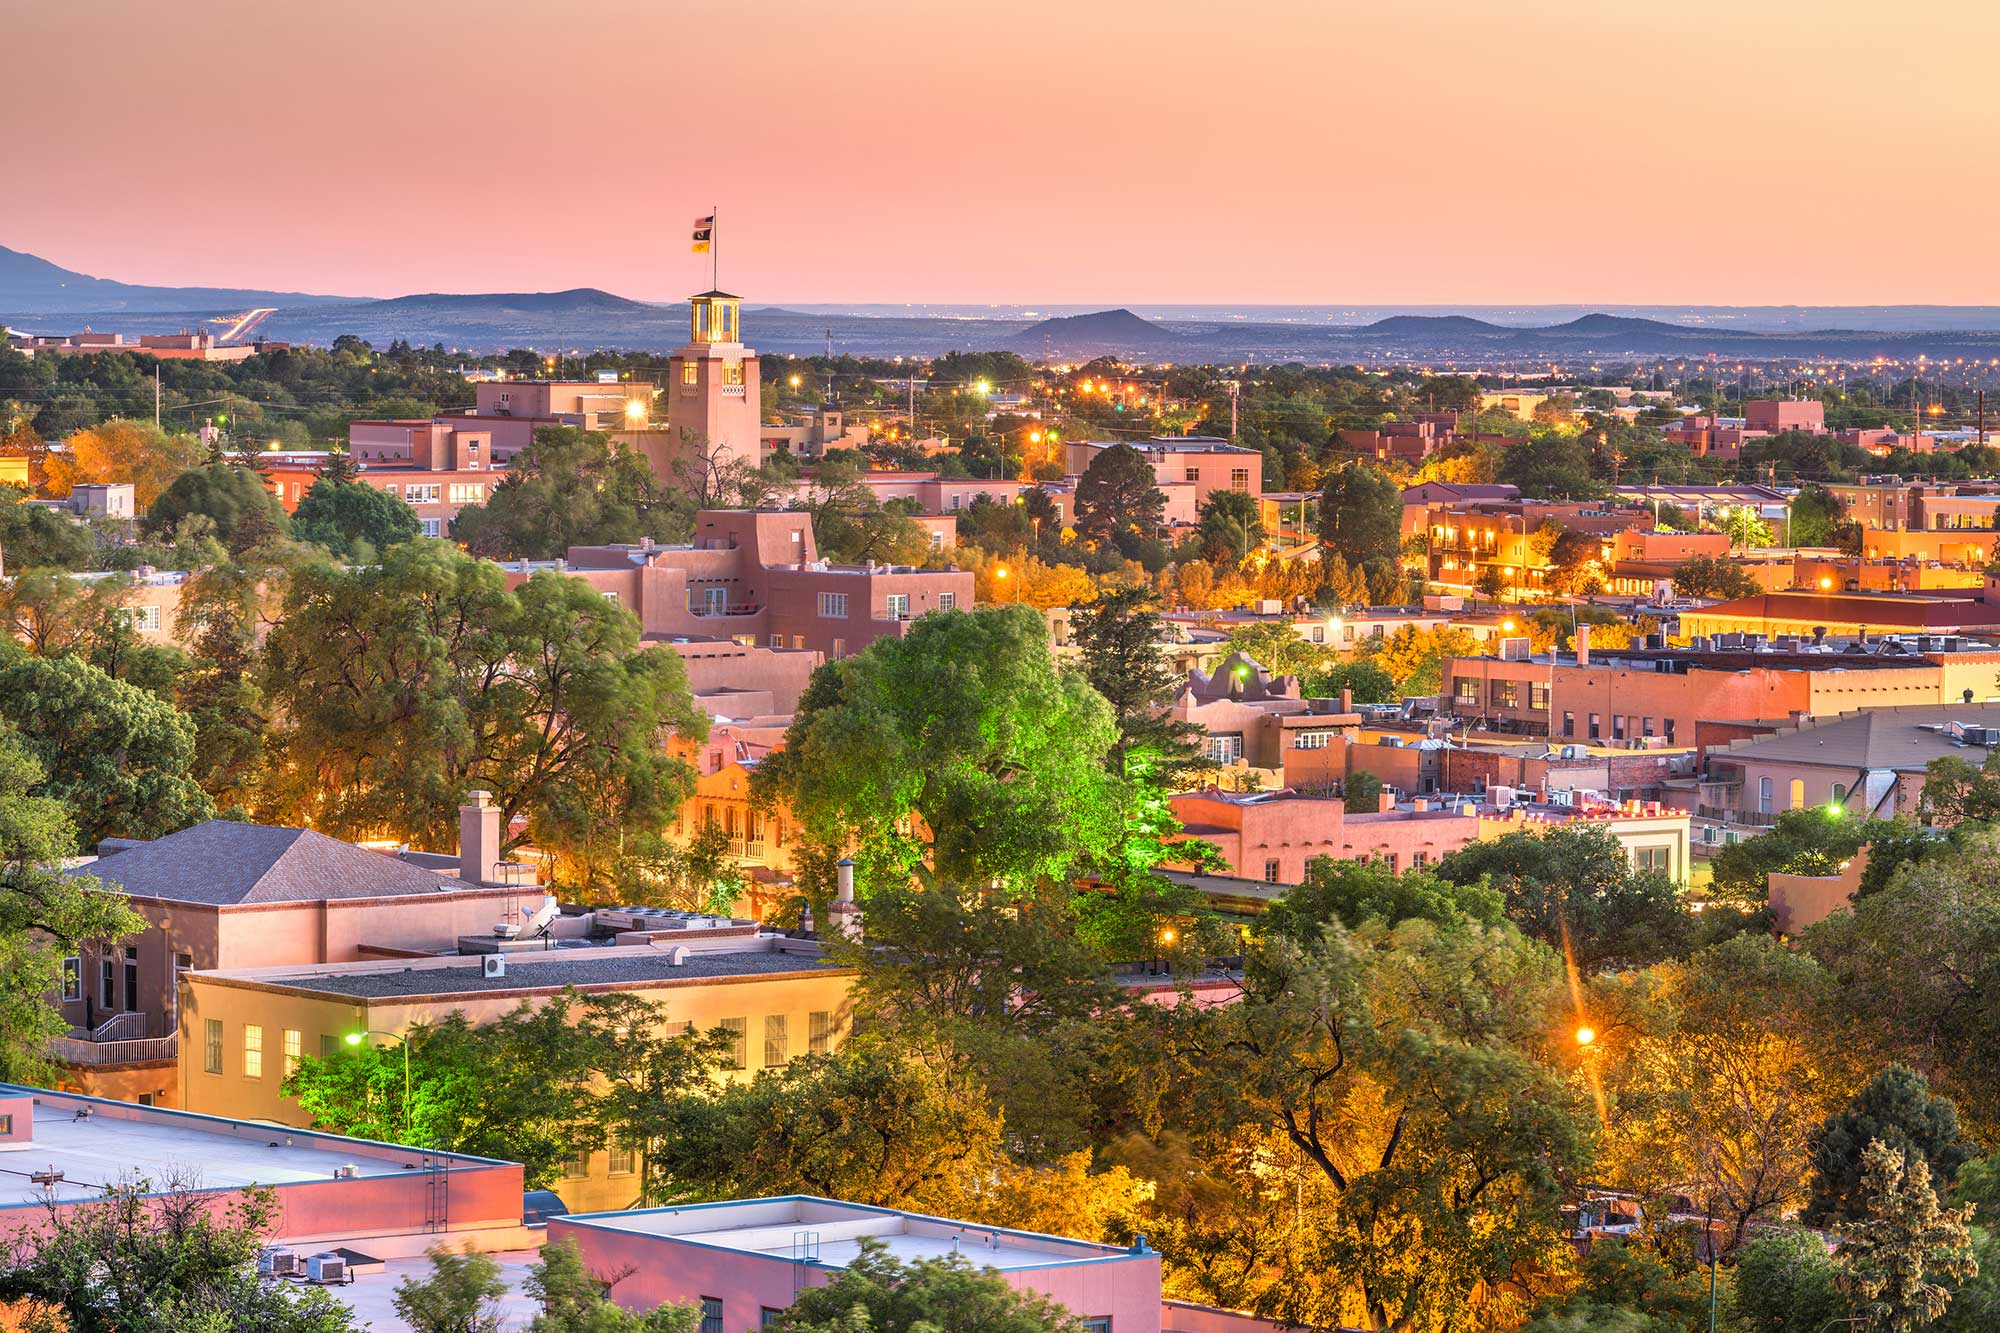 Santa Fe, New Mexico, USA downtown skyline at dusk